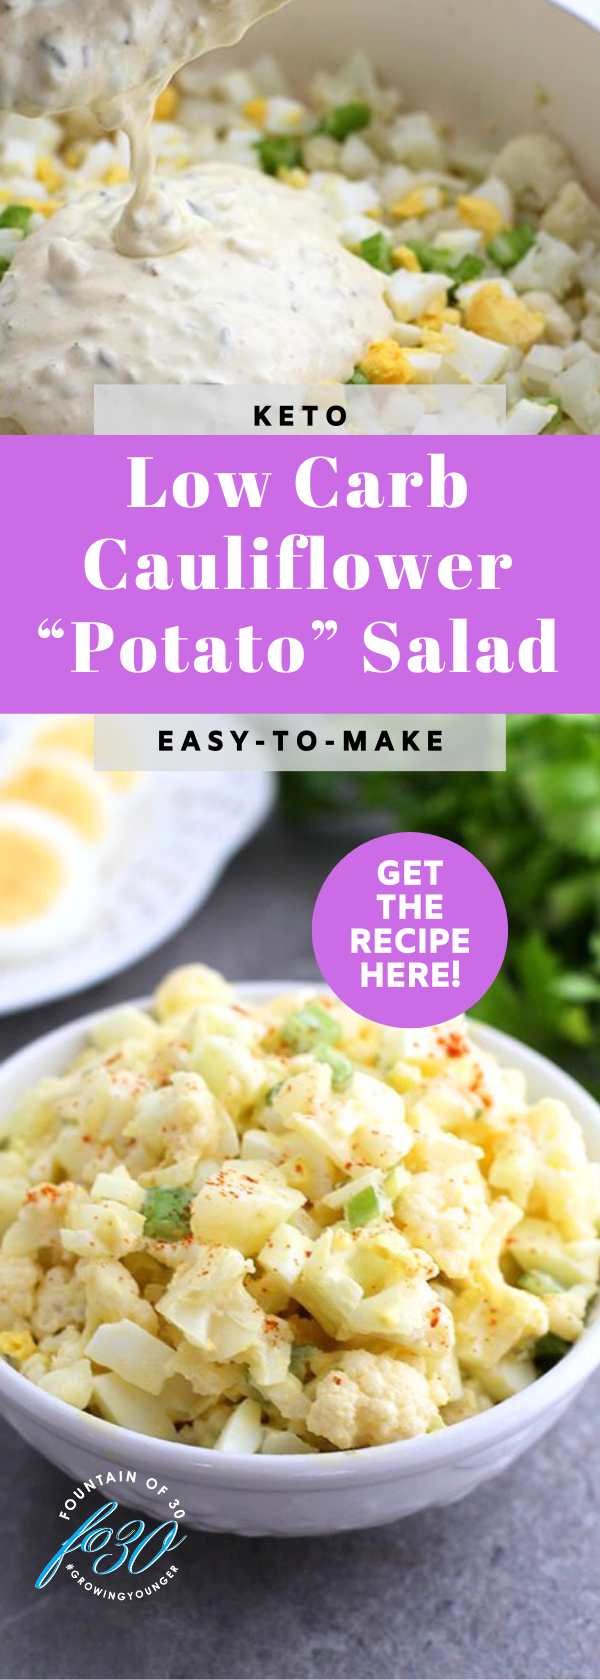 easy to make keto cauliflower potato salad recipe fountainof30